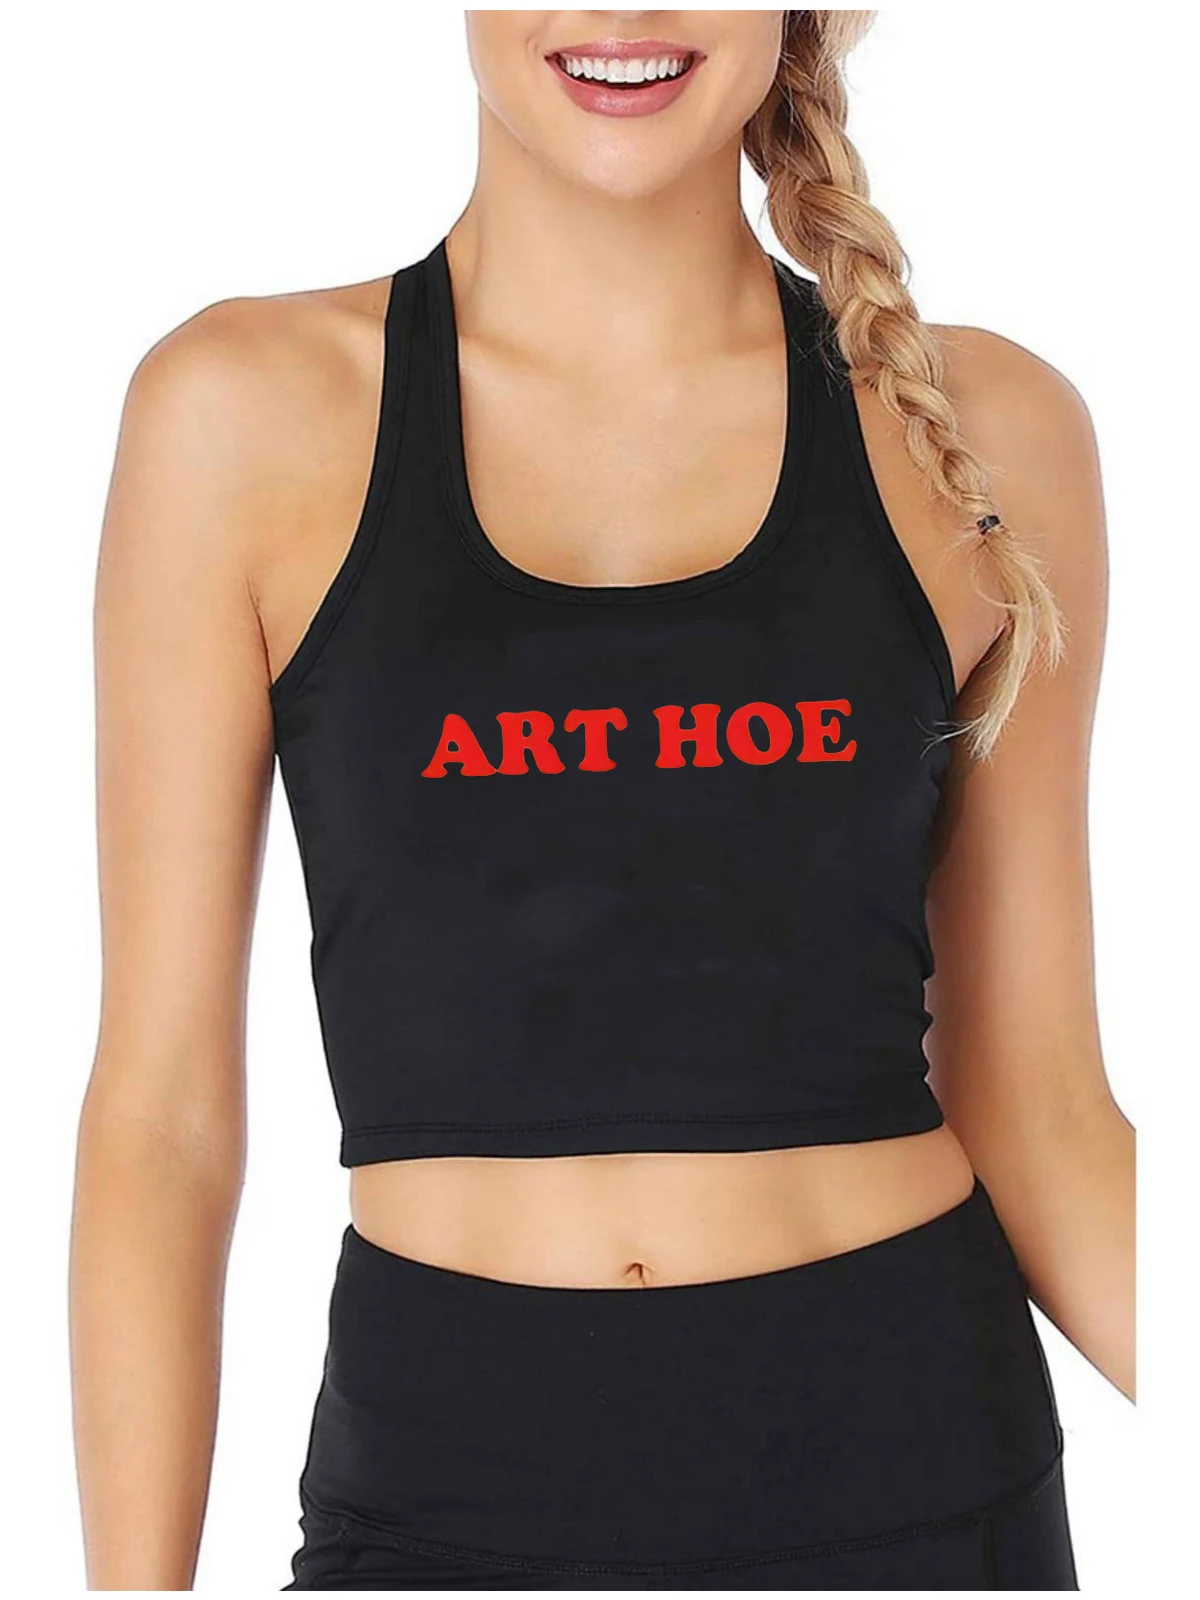 

Art Hoe Design Cotton Sexy Slim Fit Crop Top Hotwife Humorous Flirtation Tank Tops Swinger Naughty Sports Training Camisole